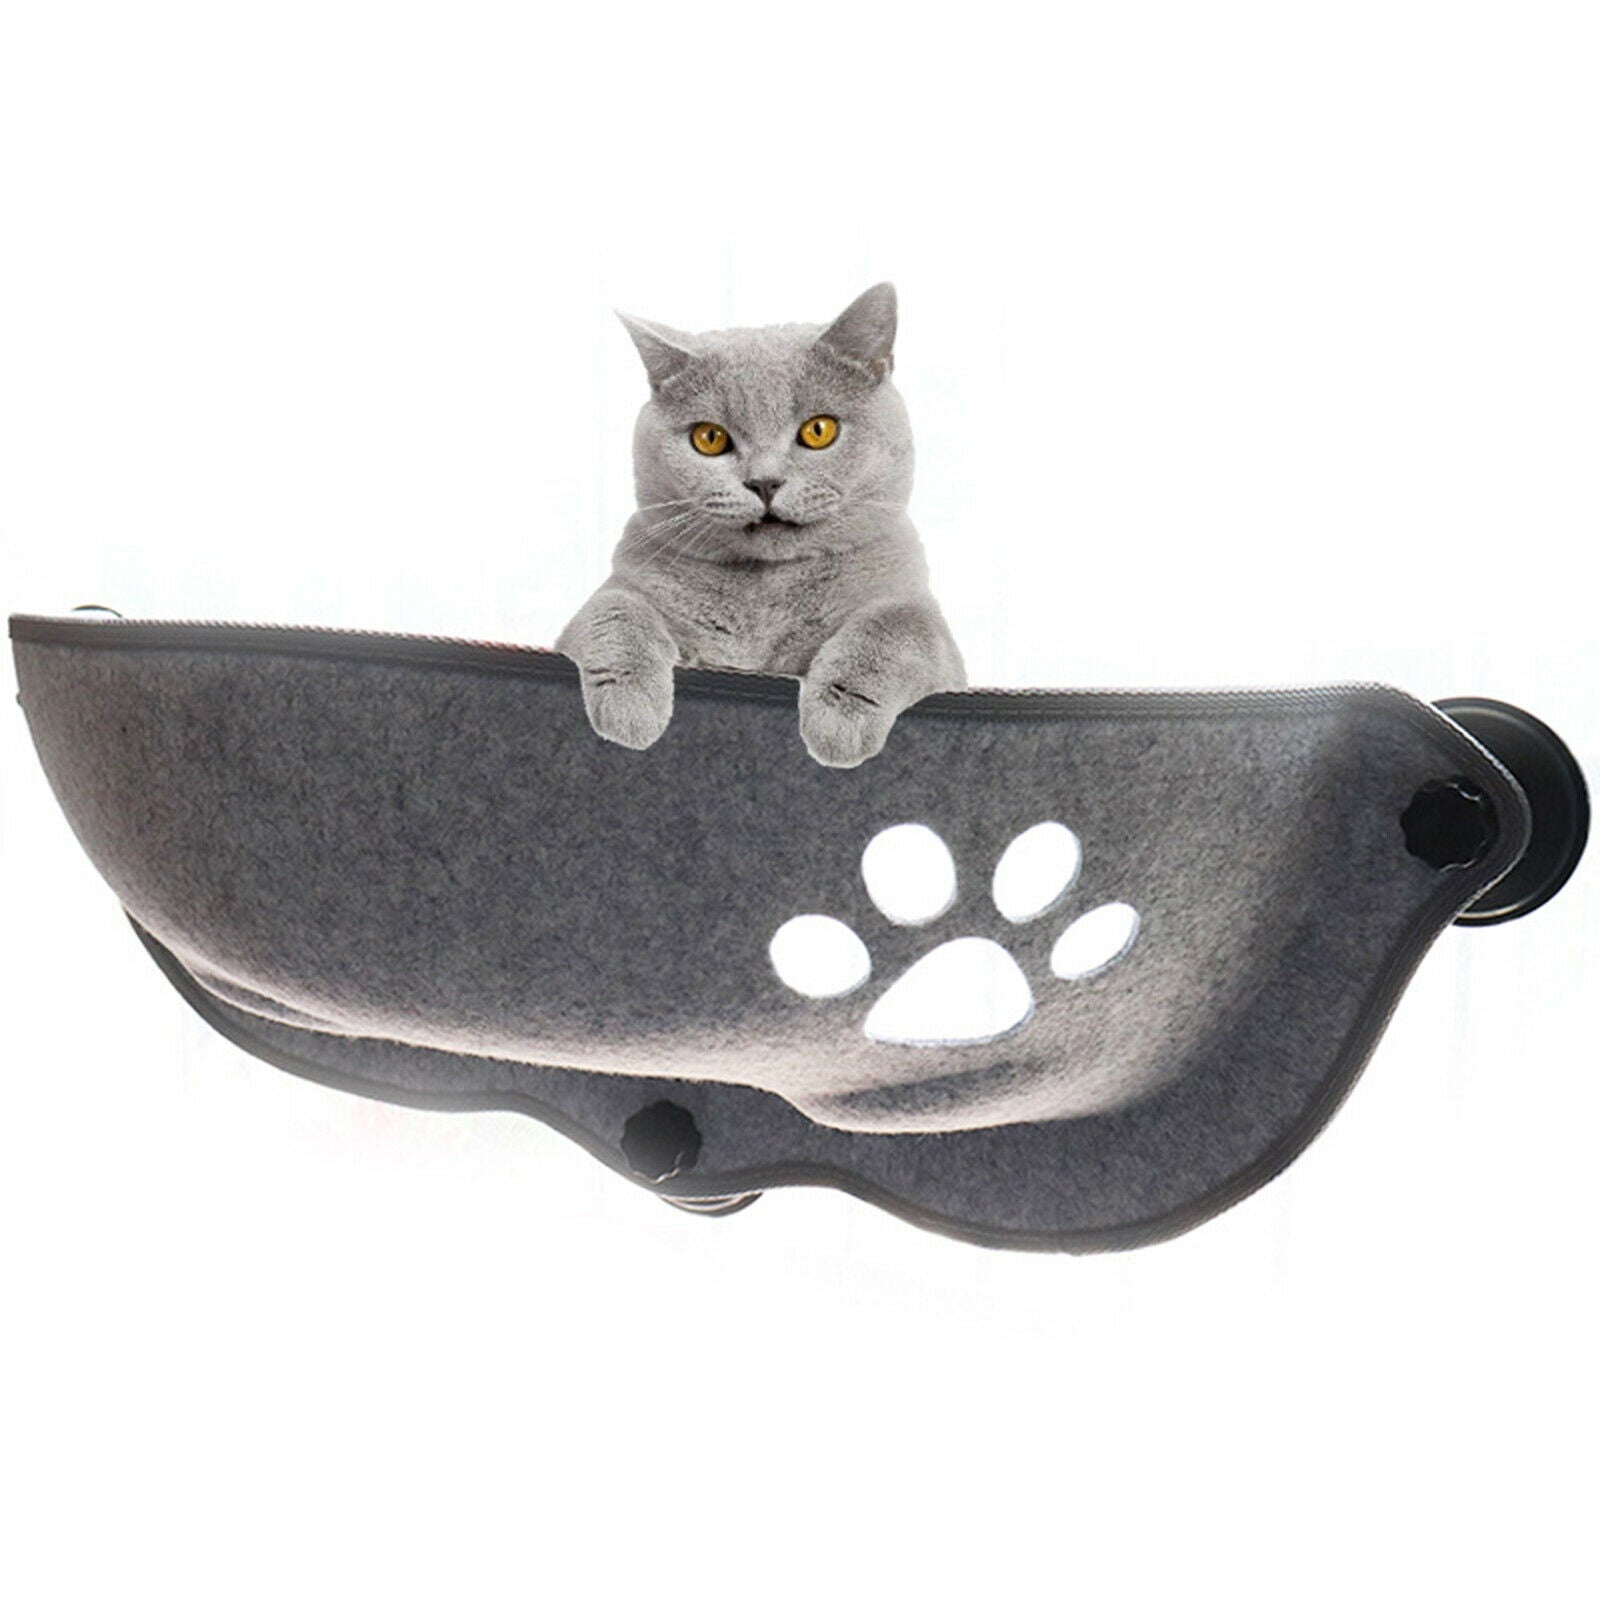 2Pcs Cozy Cat Hammock Window Felt Bed Suction Cup Pet Safety Perch Pad Seat